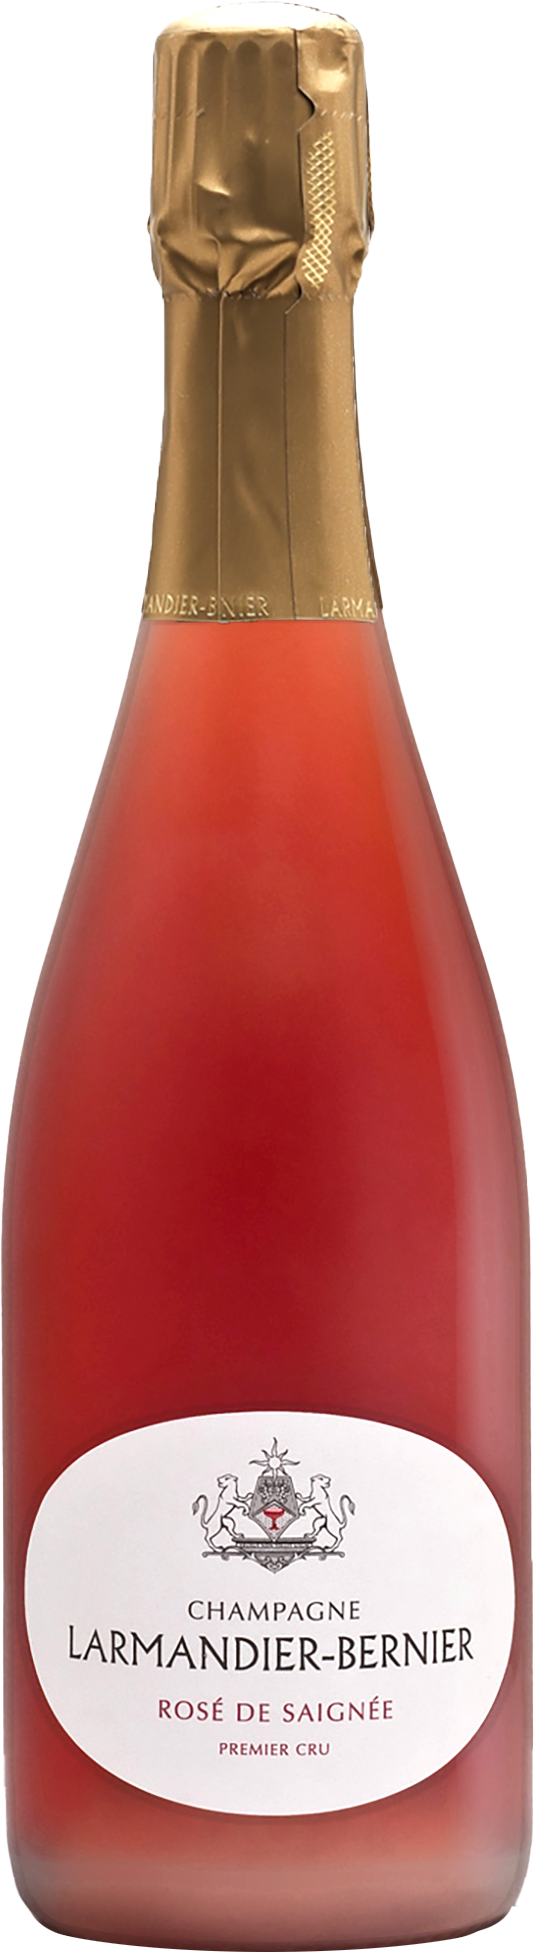 Champagne Larmandier-Bernier 1er Cru Rosé de Saignée NV (Base 19. Disg. Sep 2021)